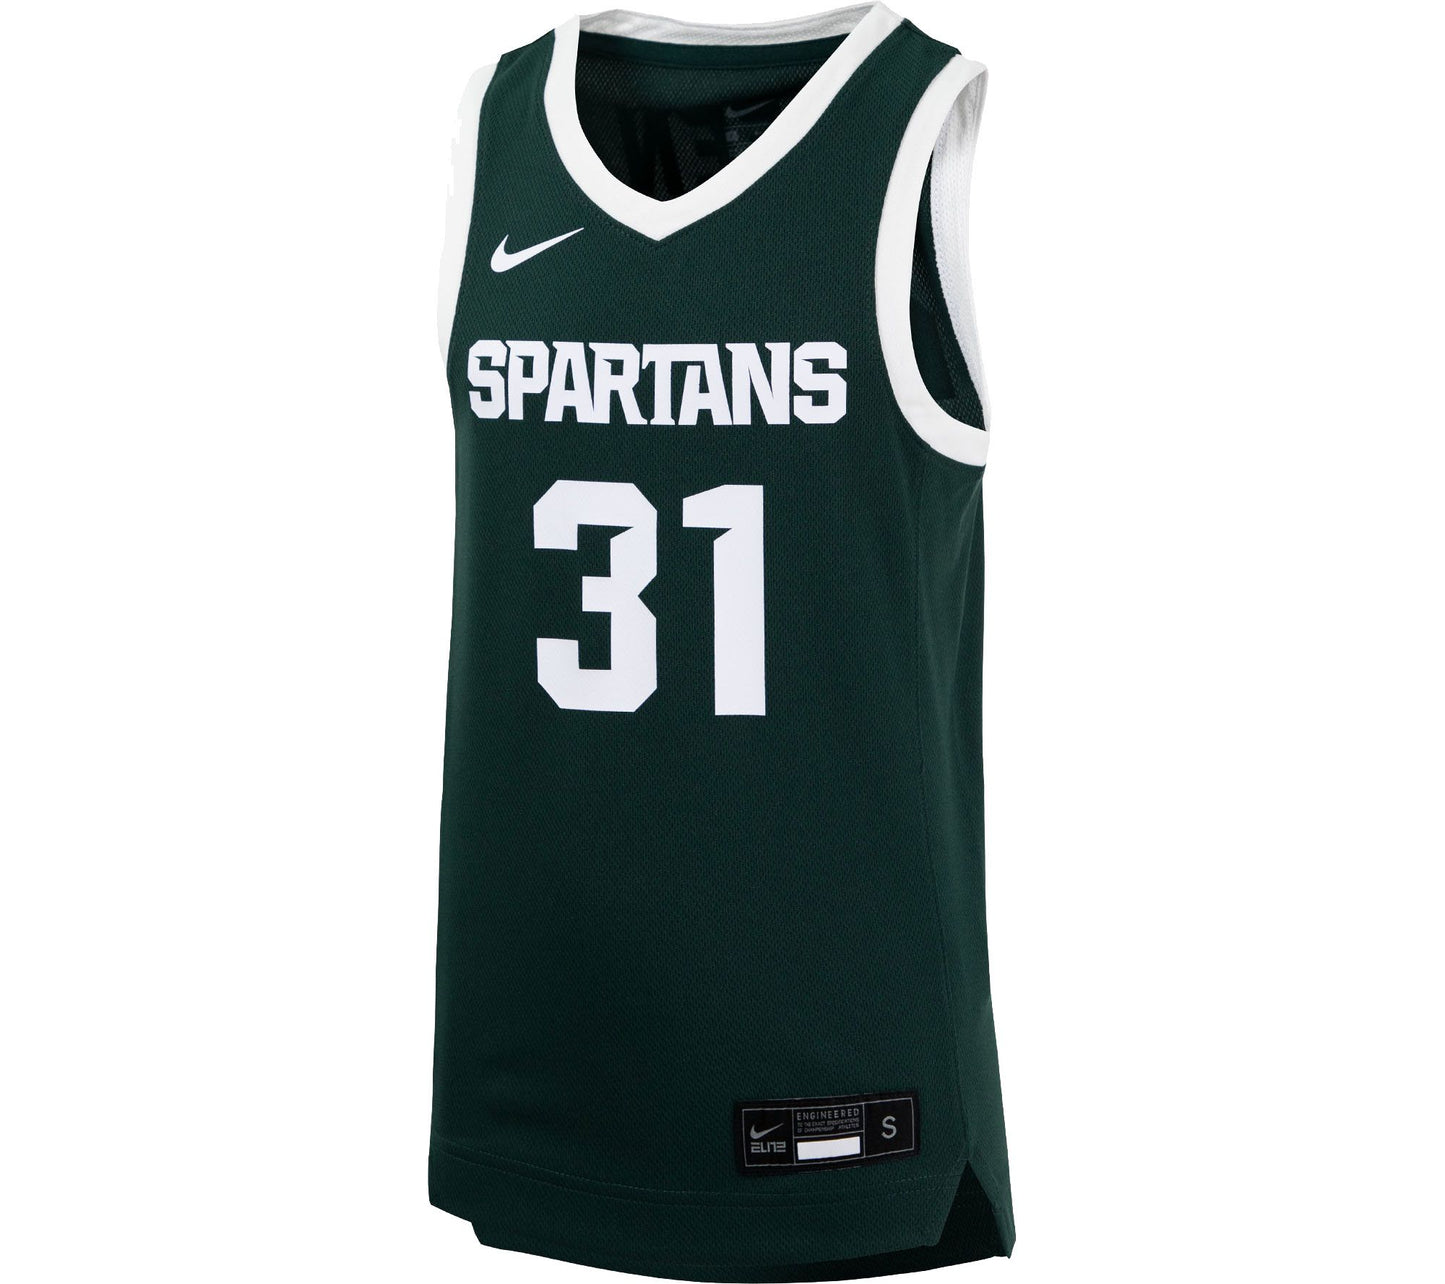 Men's Michigan State Spartans Nike Replica #31 Basketball Jersey – Green